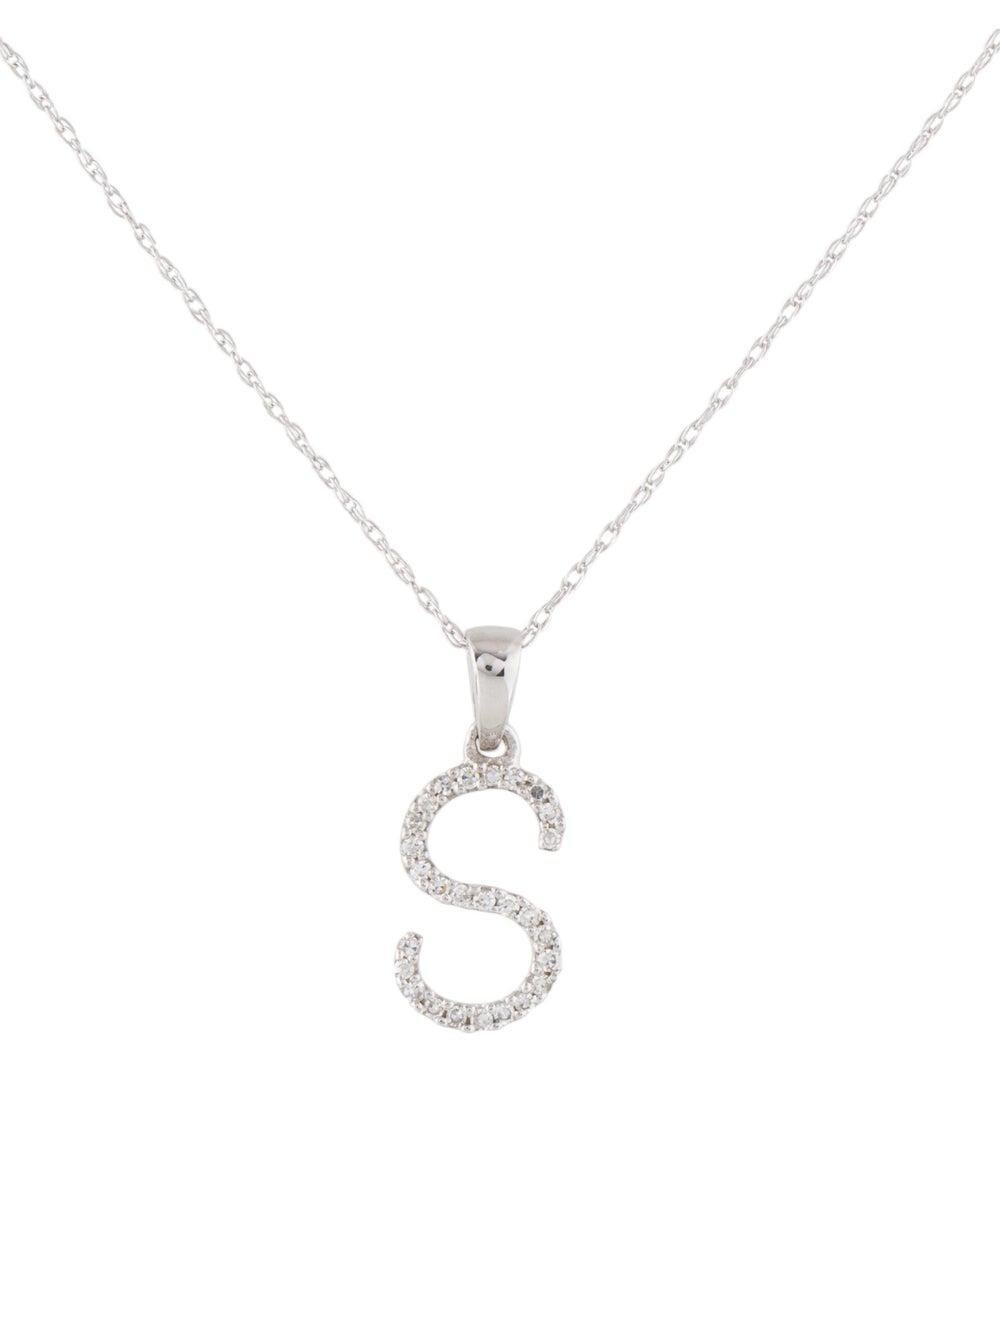 Single Cut 14k White Gold 0.06 Carat Diamond Initial Pendant Necklace, Initial S For Sale